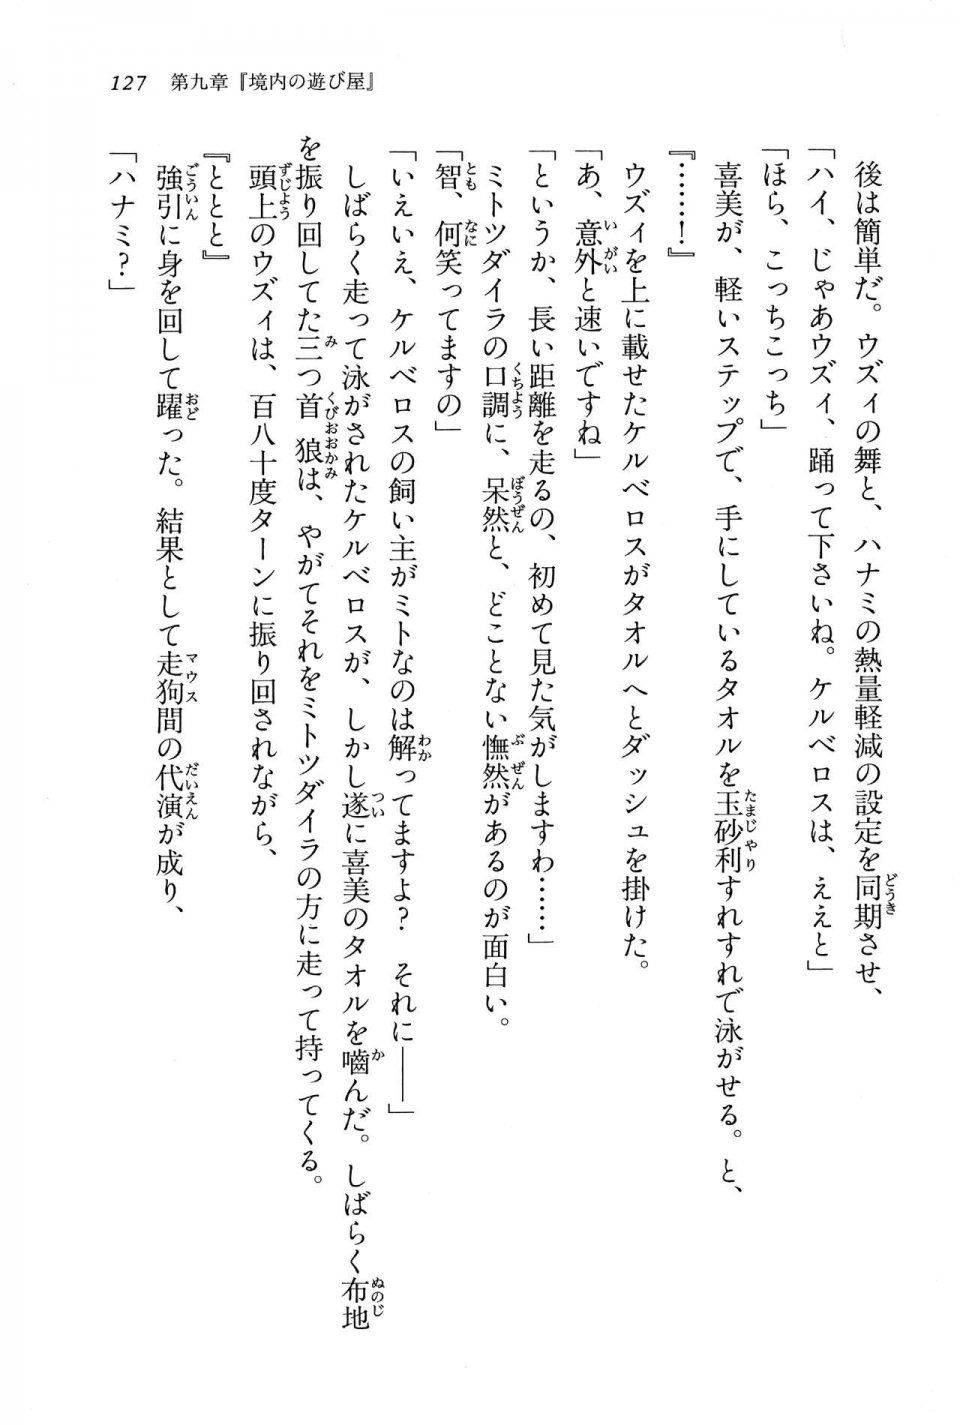 Kyoukai Senjou no Horizon BD Special Mininovel Vol 6(3B) - Photo #131